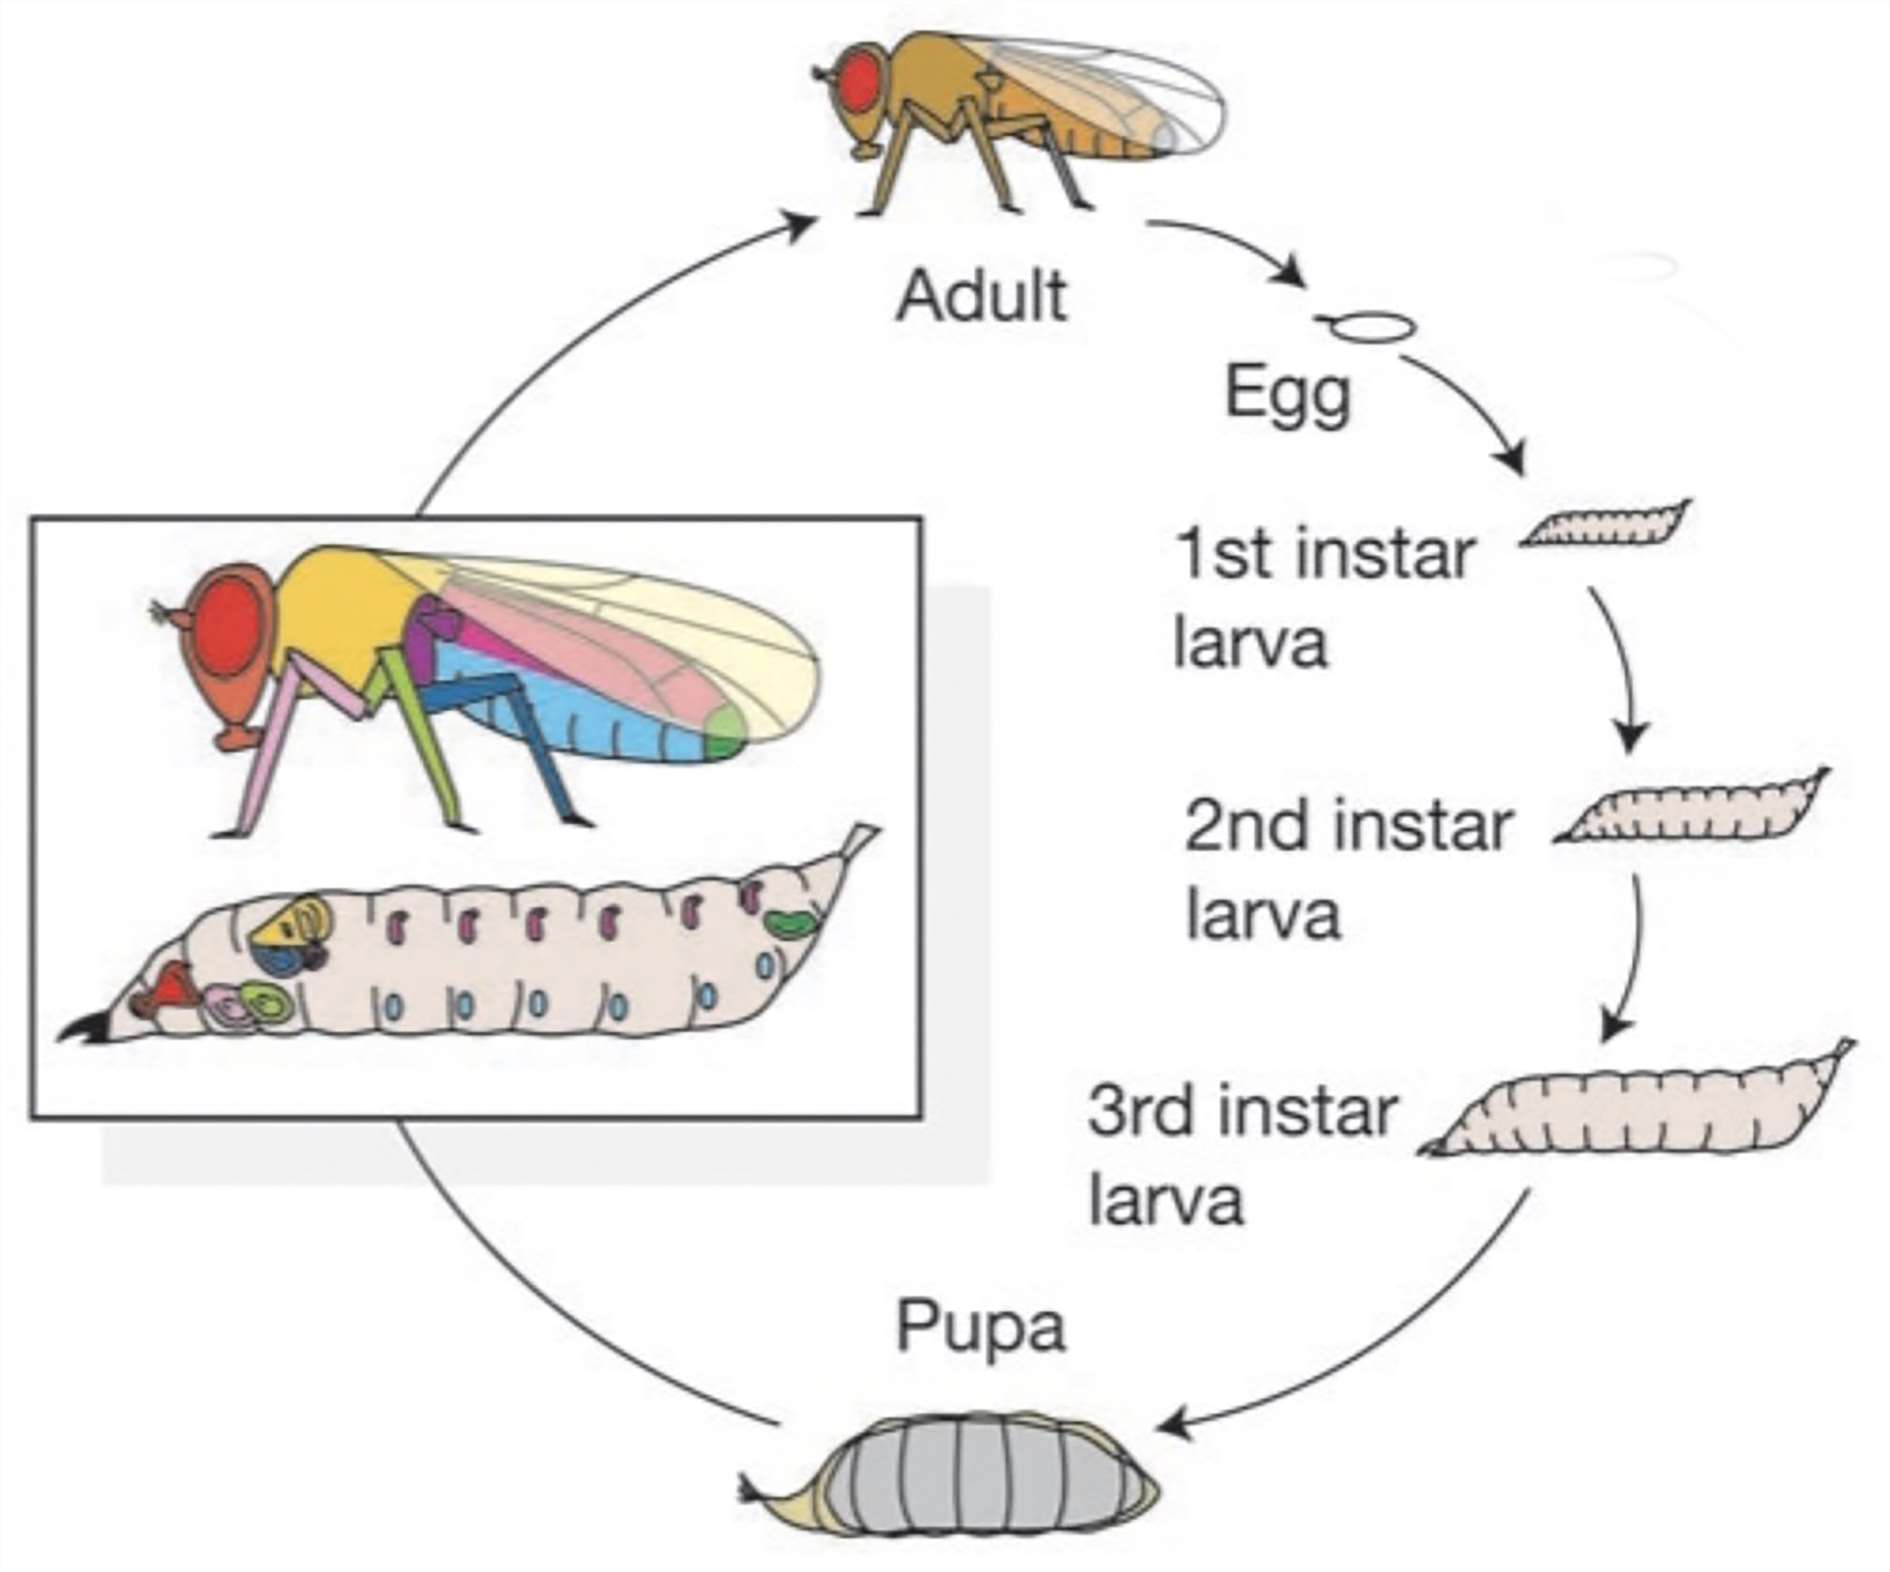 The life cycle of Drosophila.